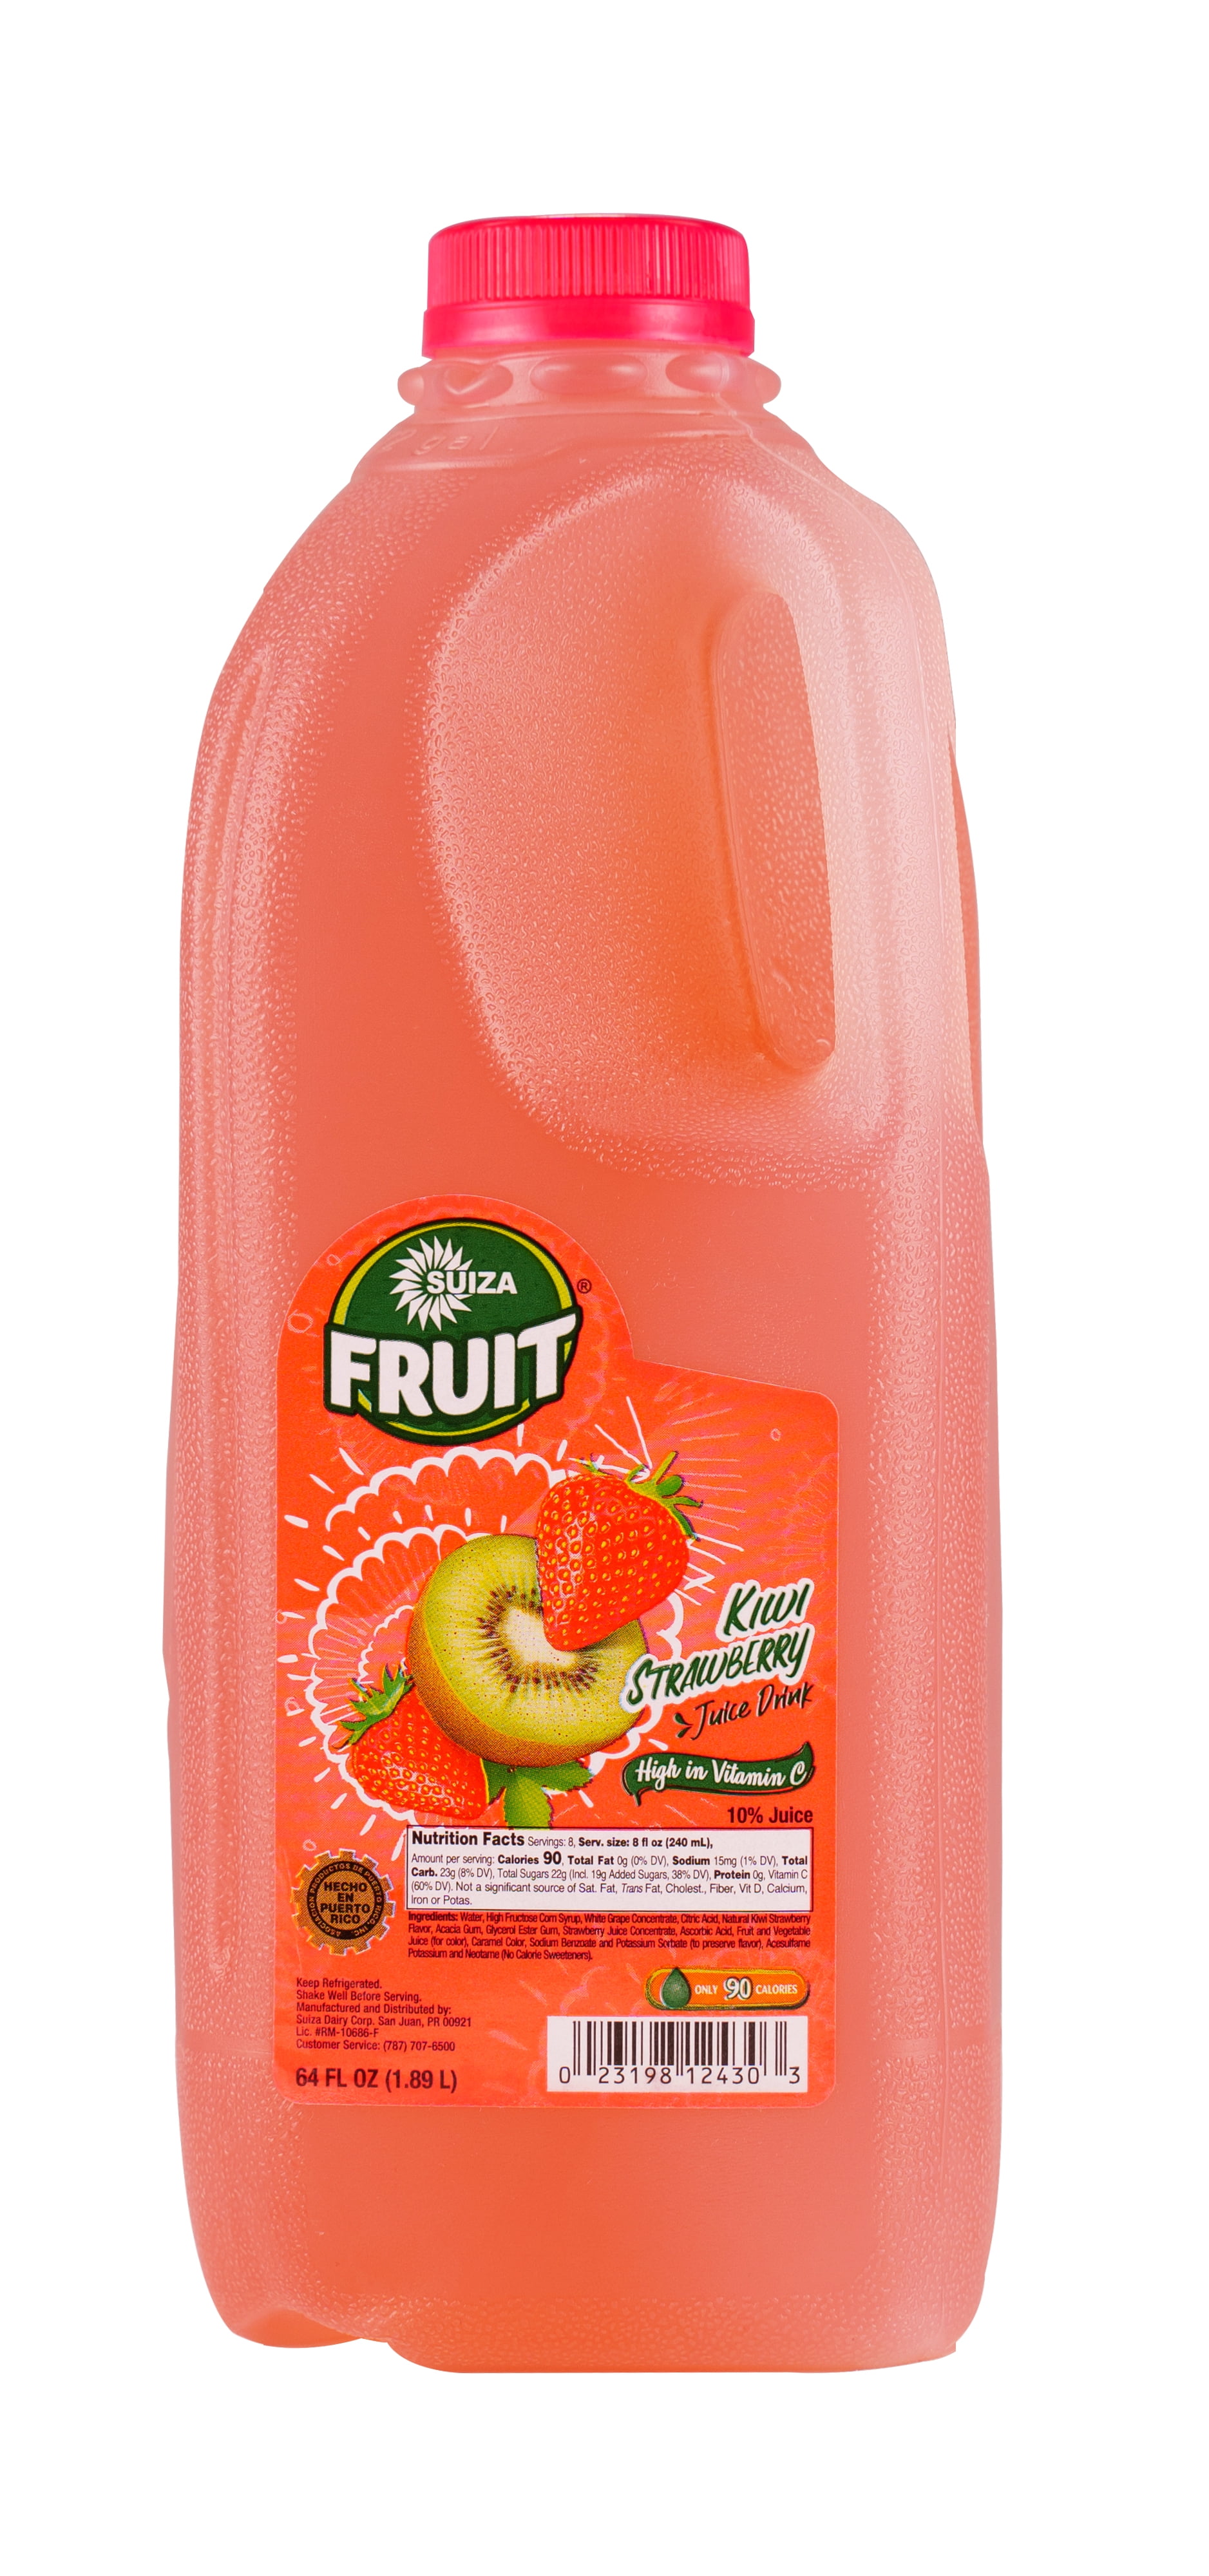 64oz Suiza Fruit Strawberry Kiwi-